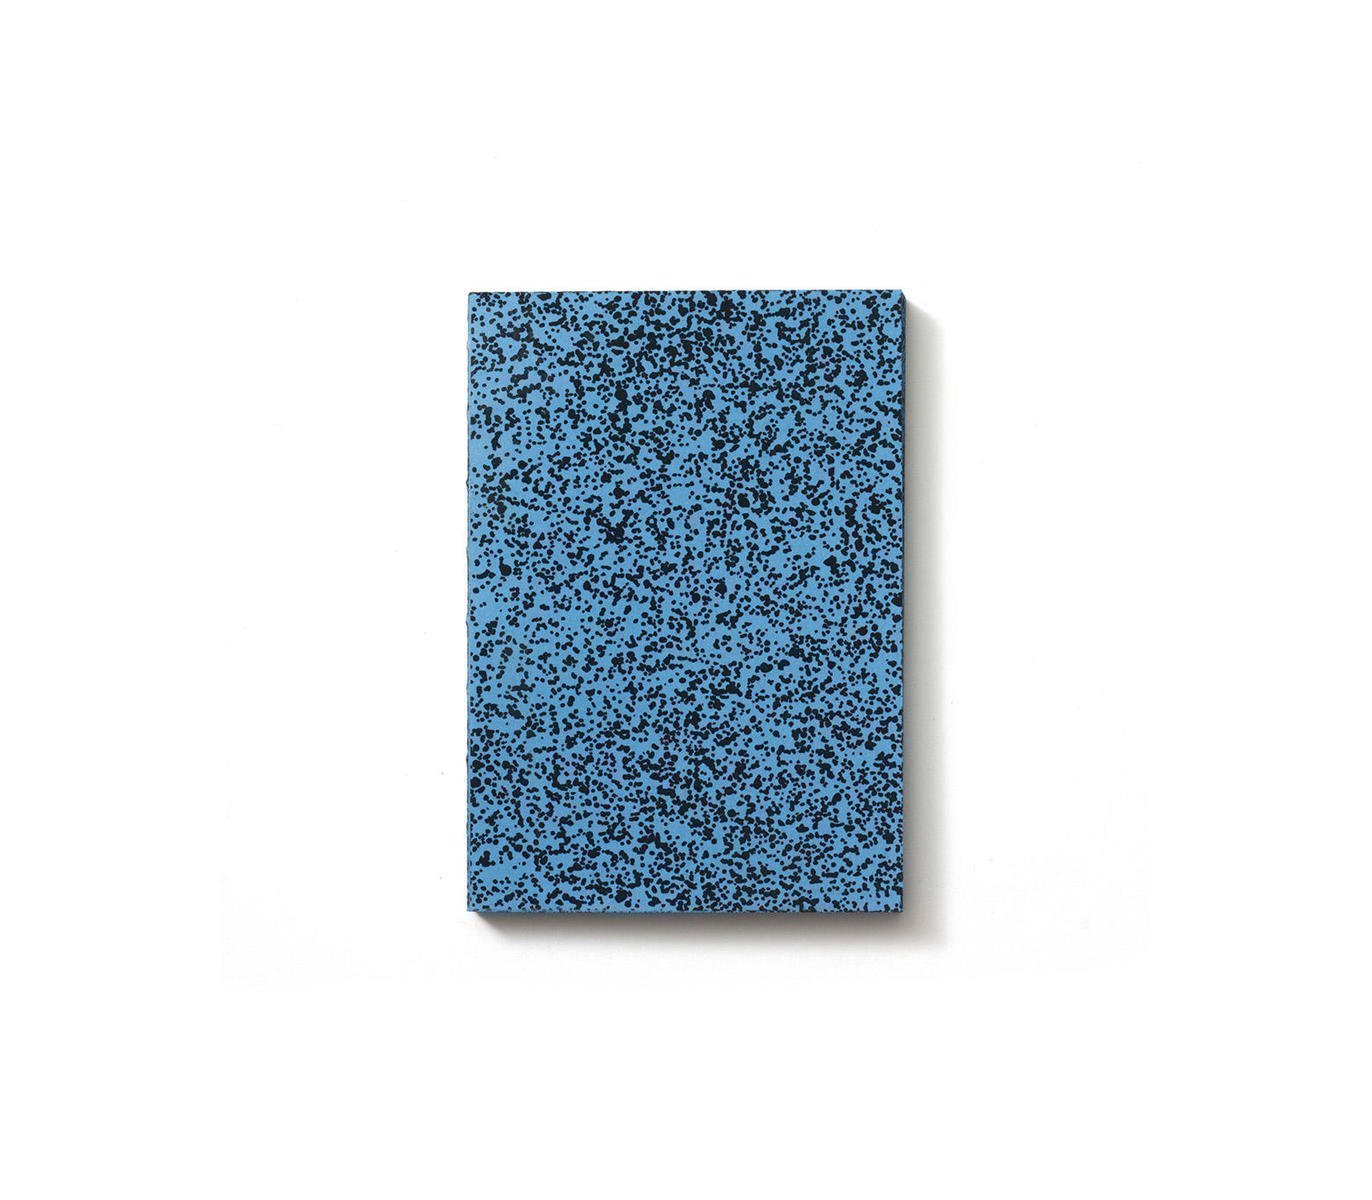 Labobratori Spray Splash Soft Cover A6 Notebook